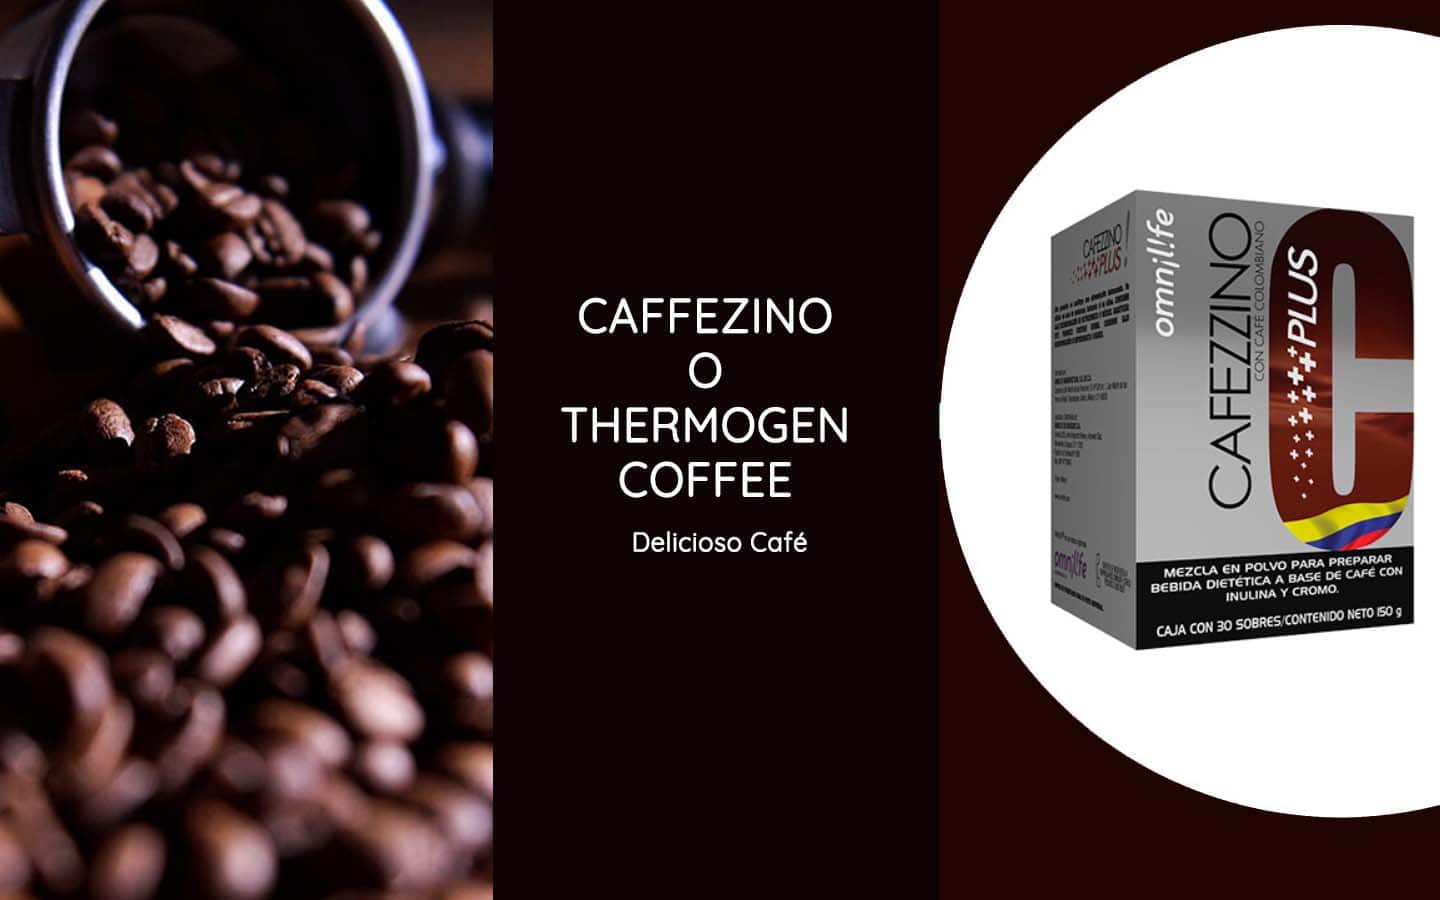 Cafezzino o Thermogen Coffee ayuda al control de peso